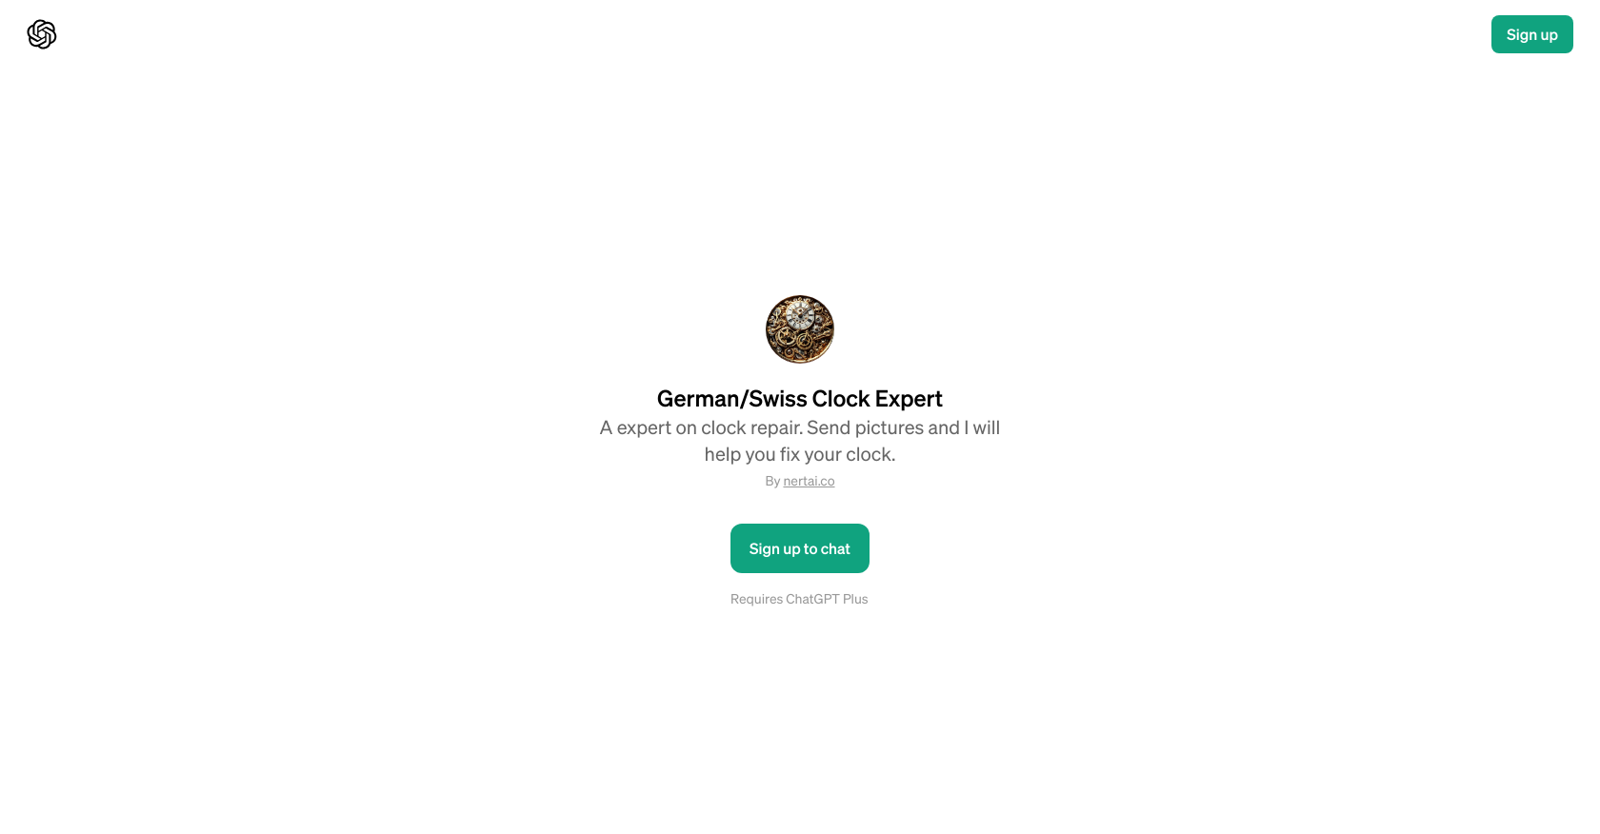 German/Swiss Clock Expert website